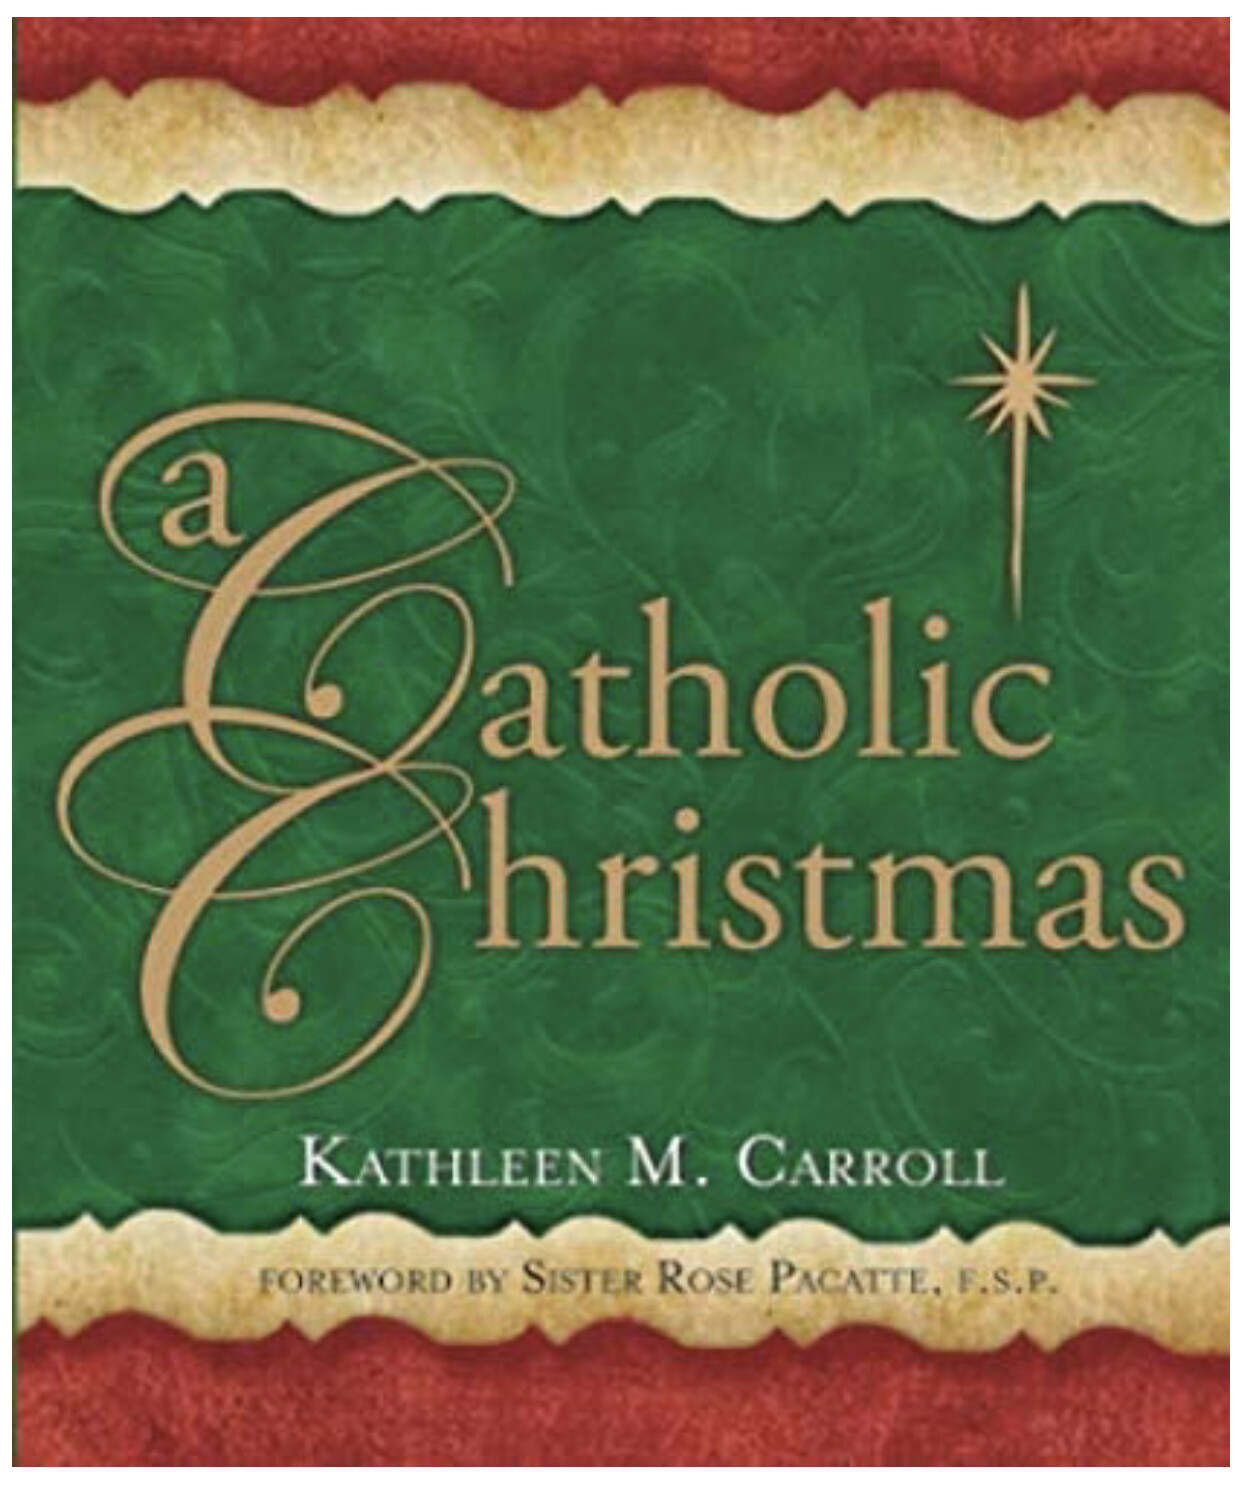 A Catholic Christmas by Kathleen M Carroll